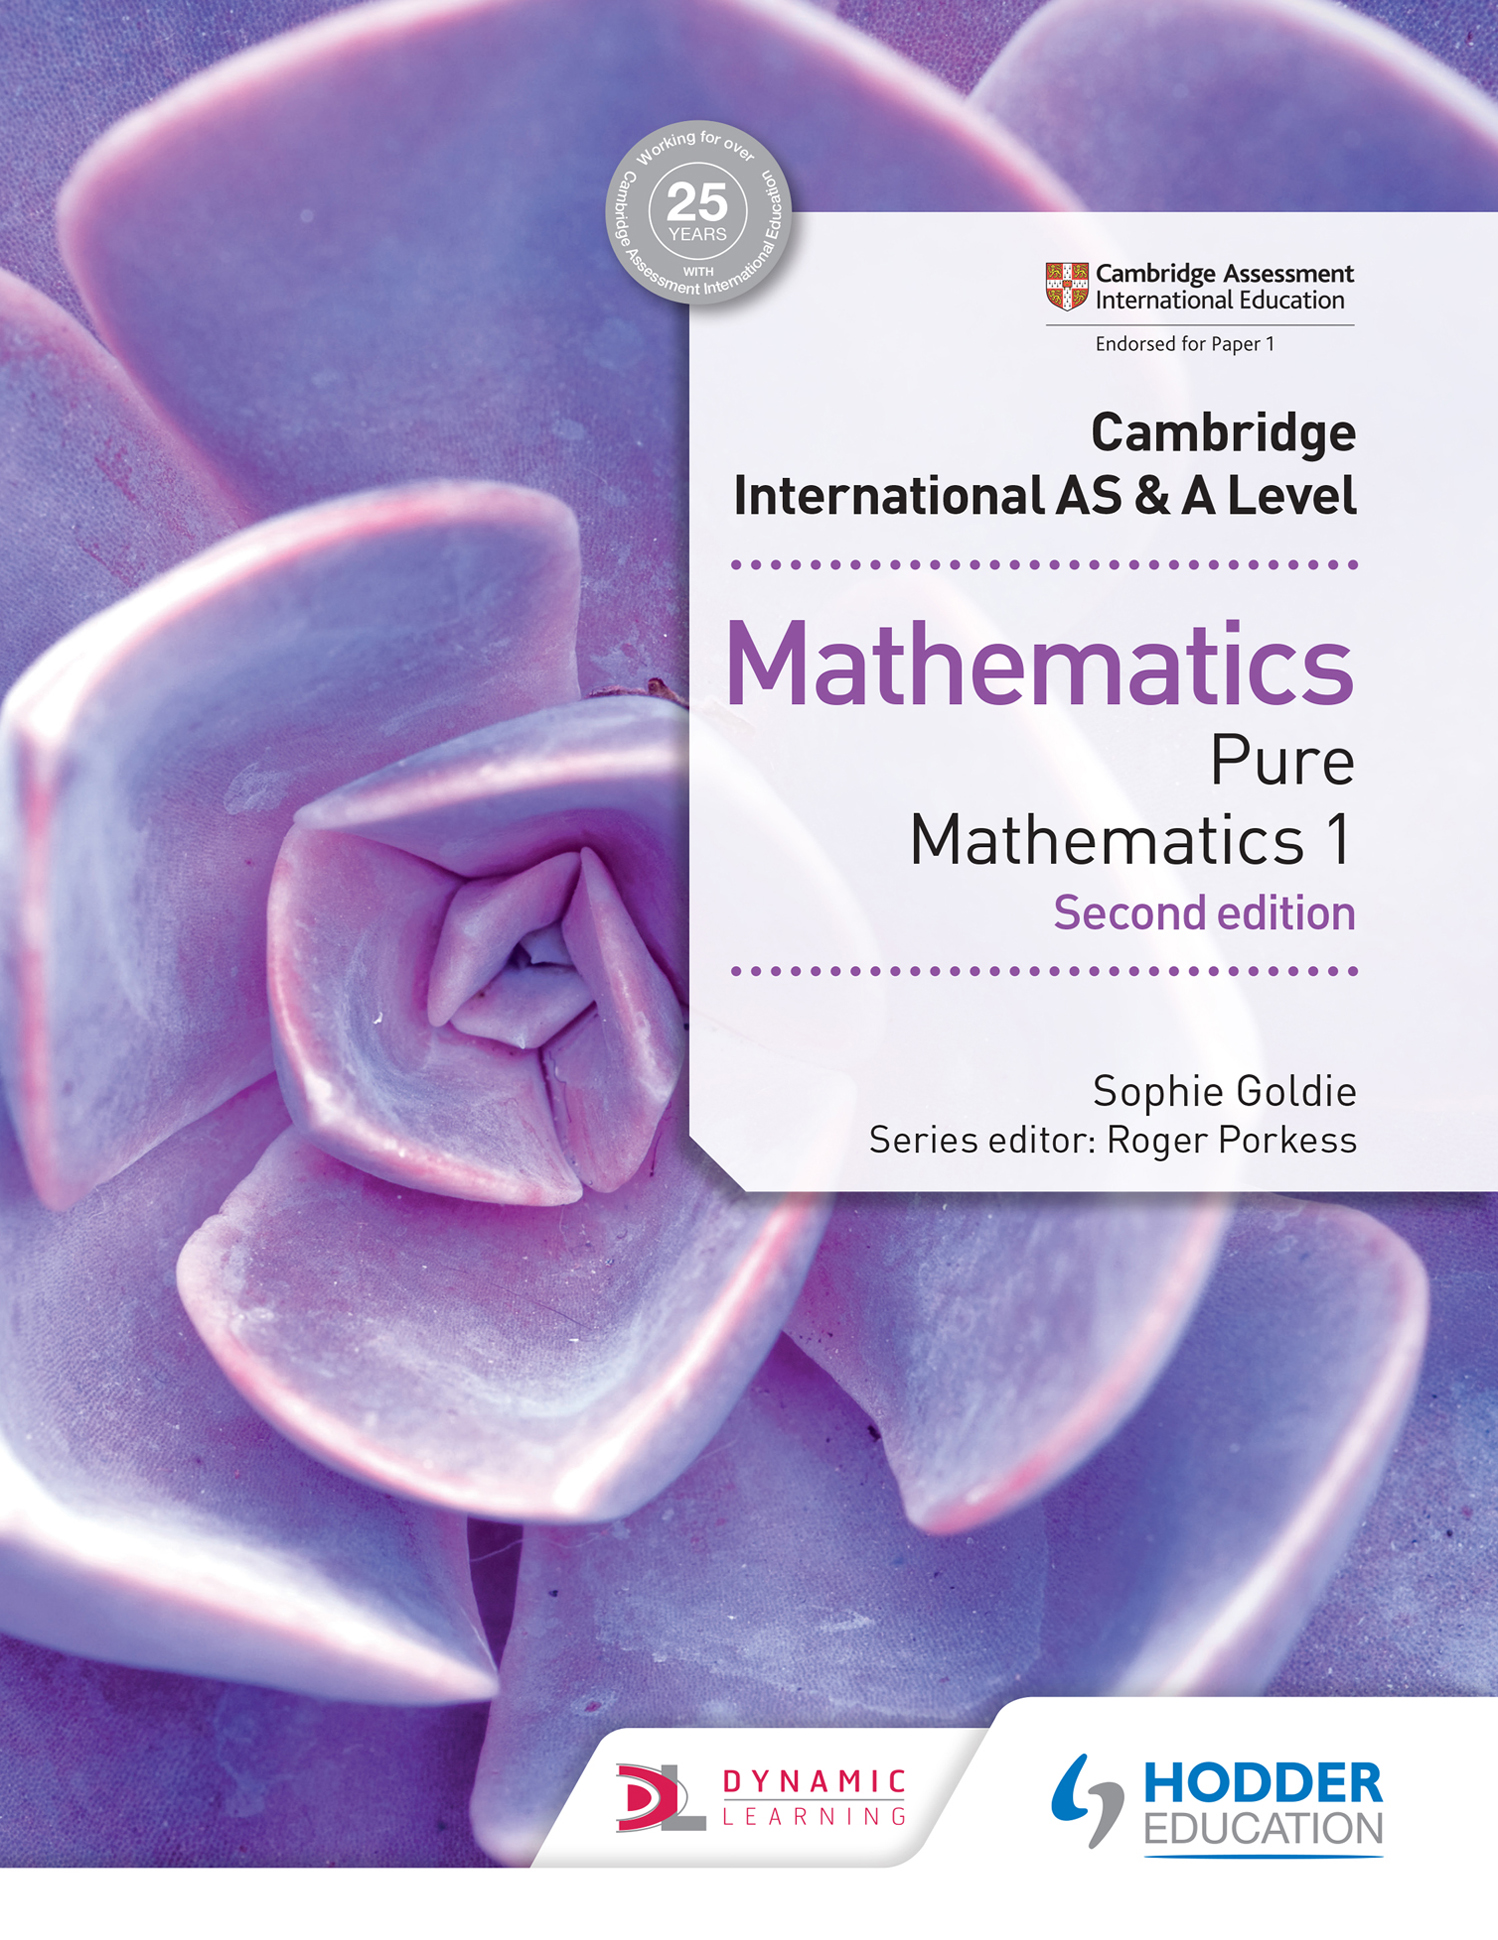 A level mathematics books free download pdf 13 steps to mentalism tony corinda pdf free download